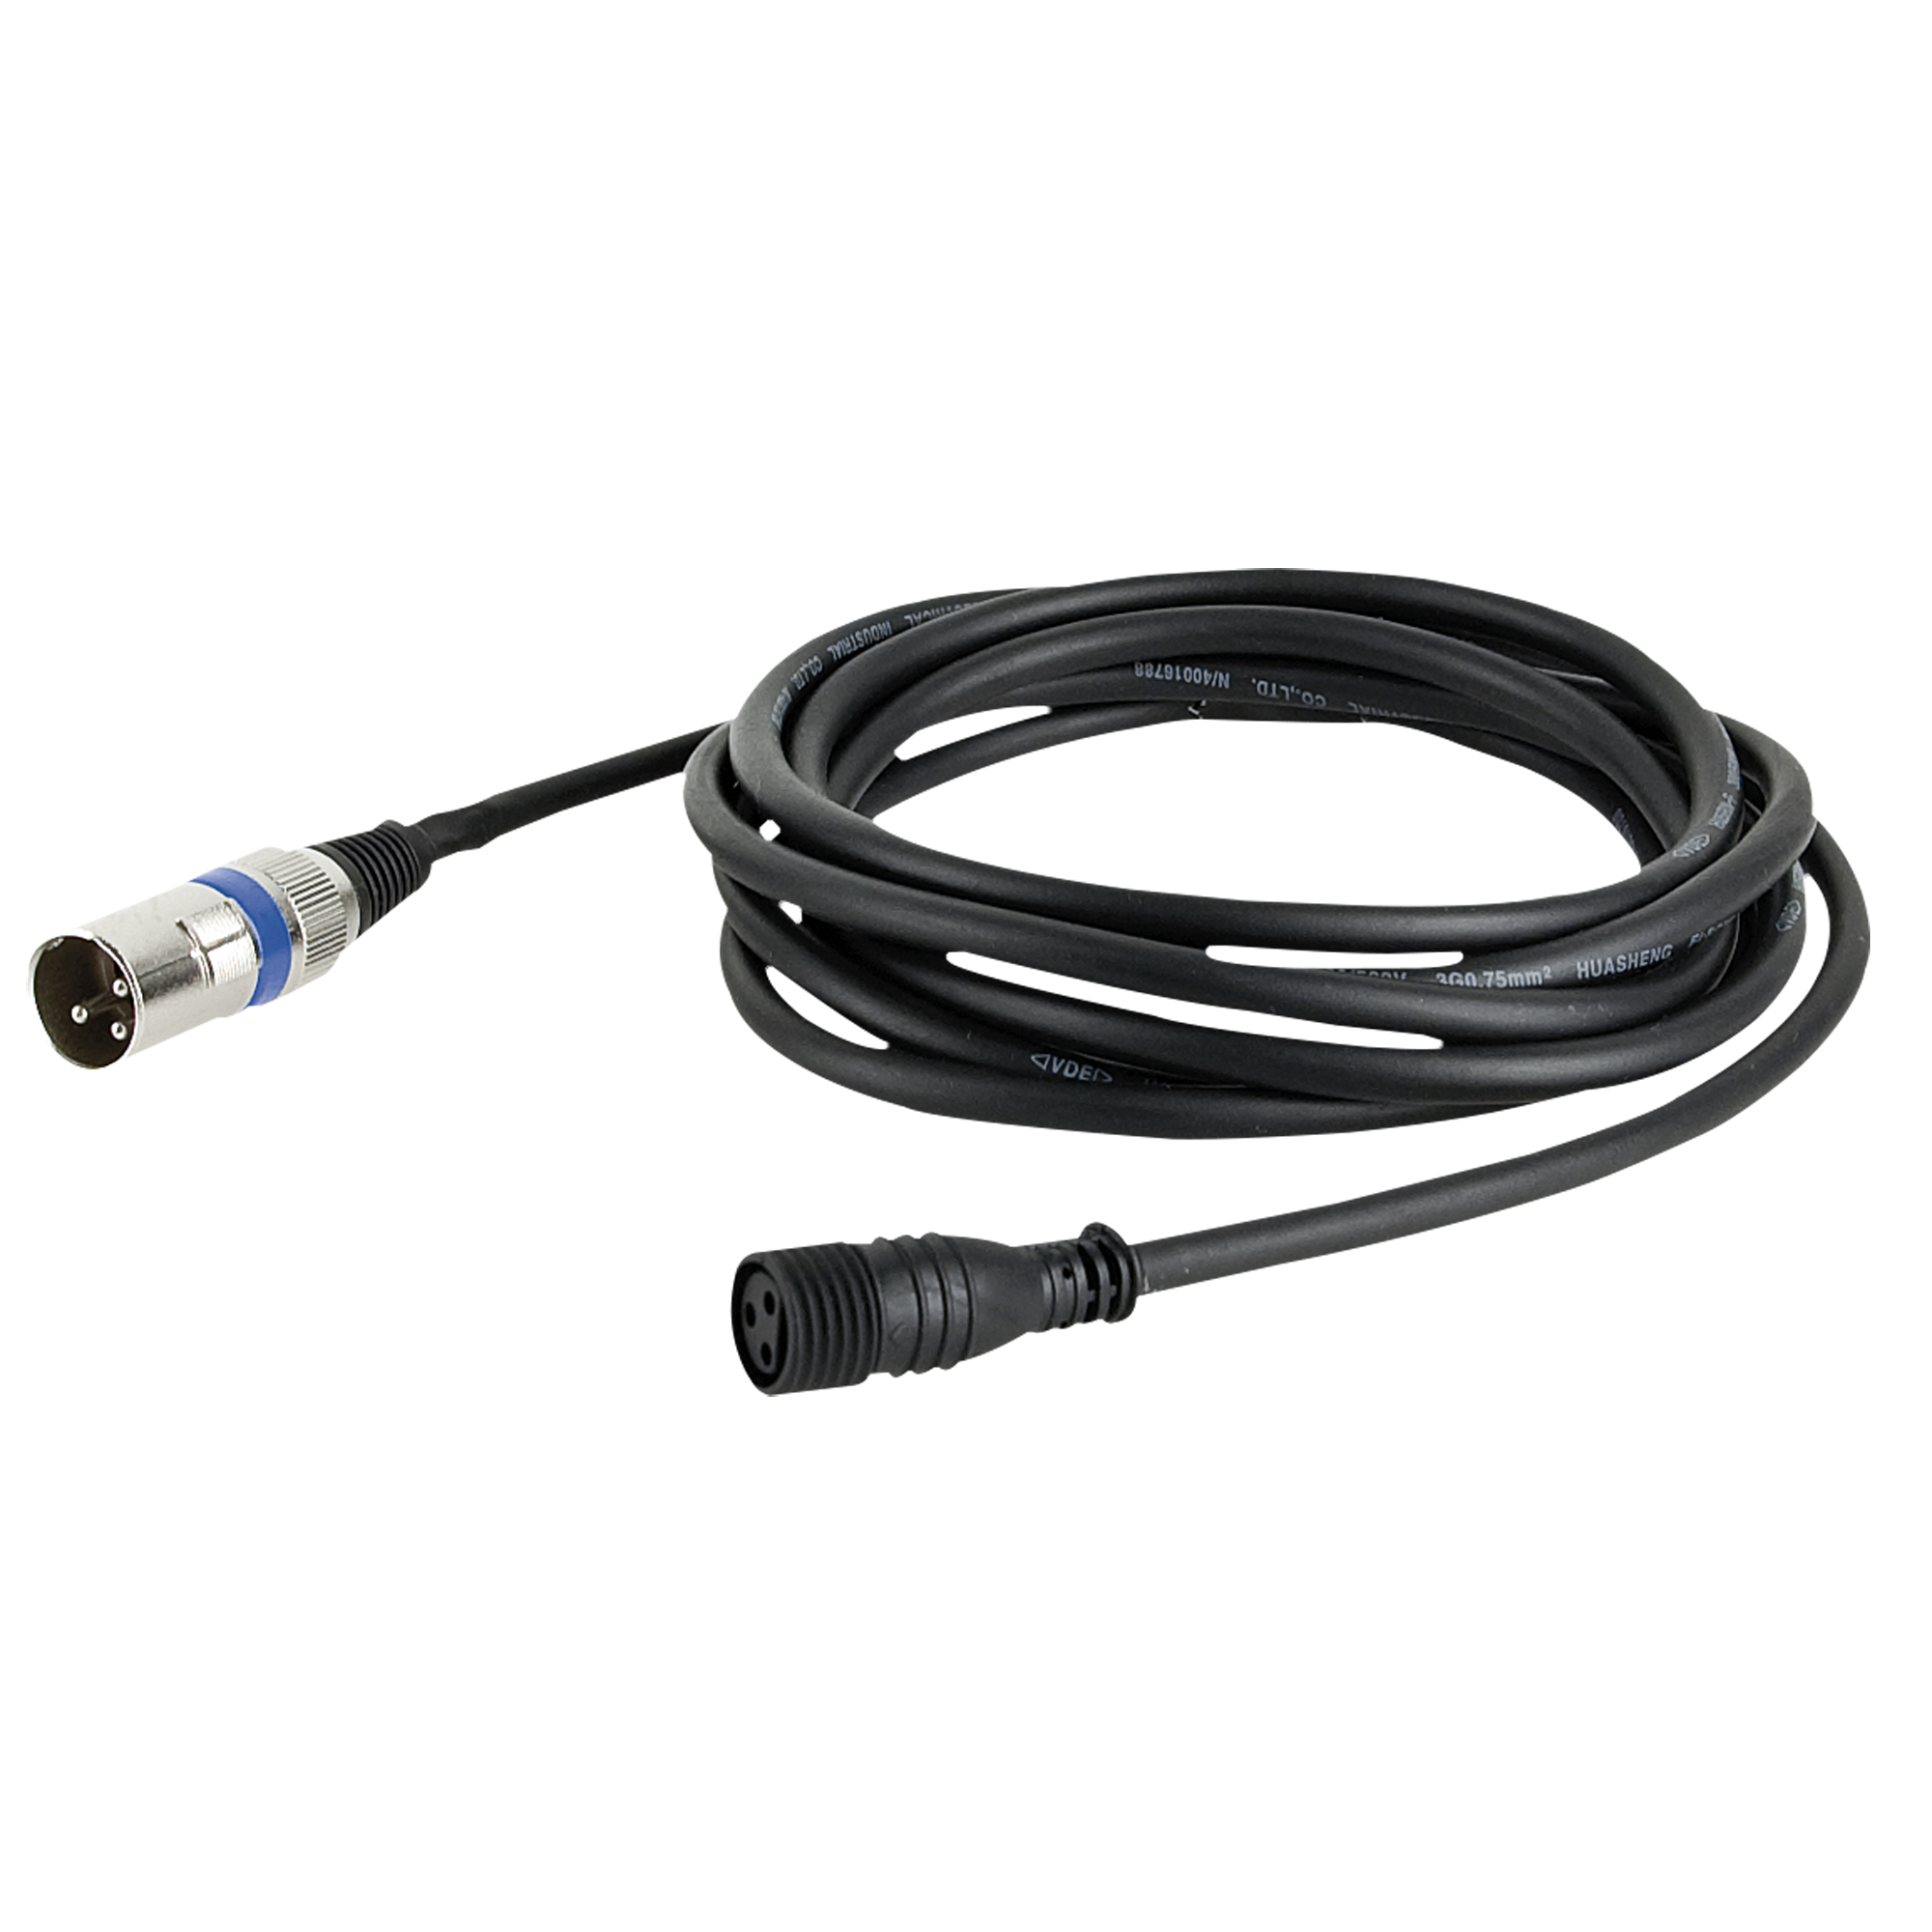 DMX Input Cable for Cameleon - Onlinediscowinkel.nl